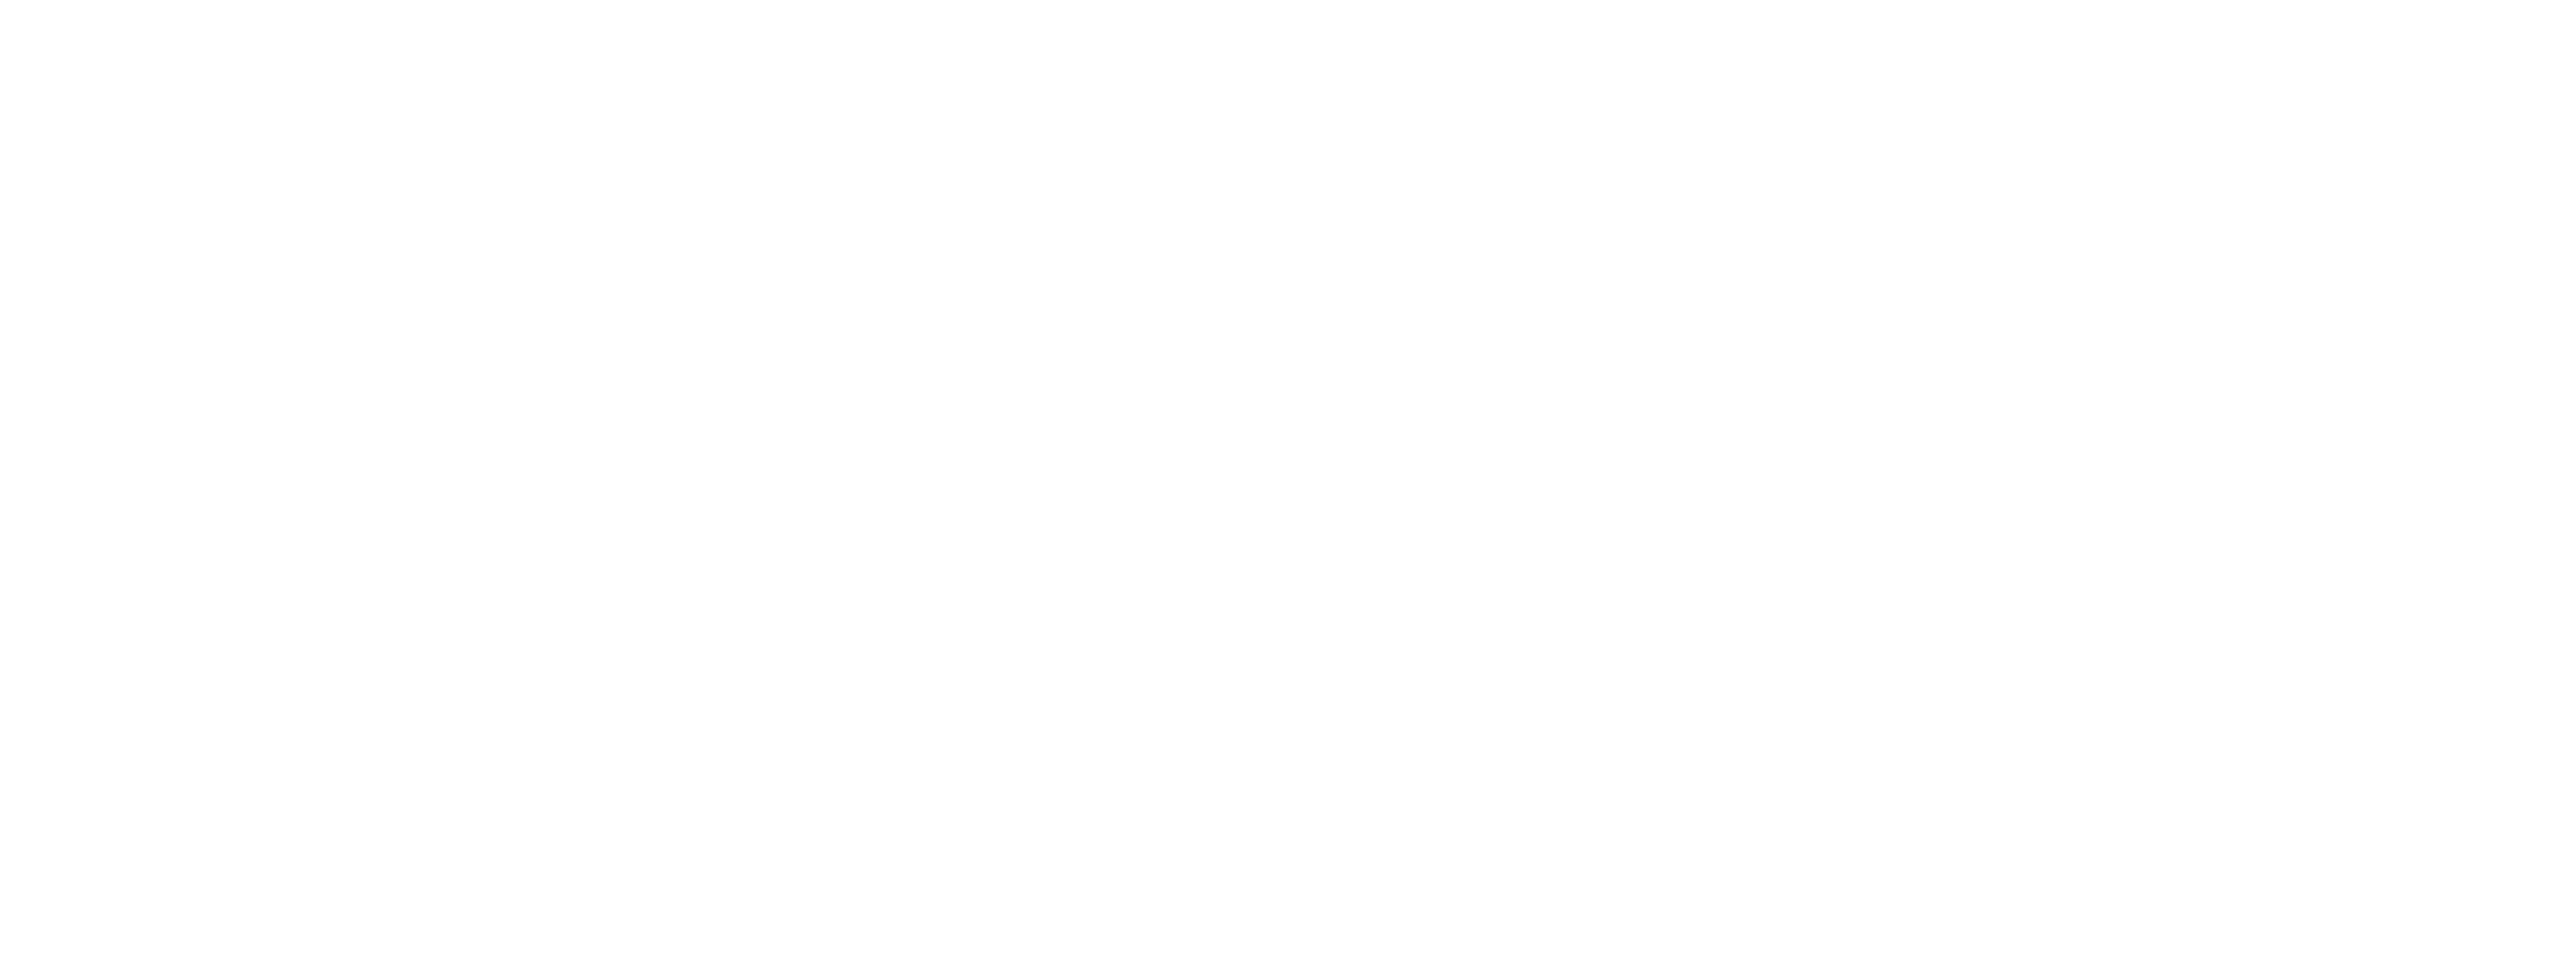 Gröna Lund i Vireda logotyp